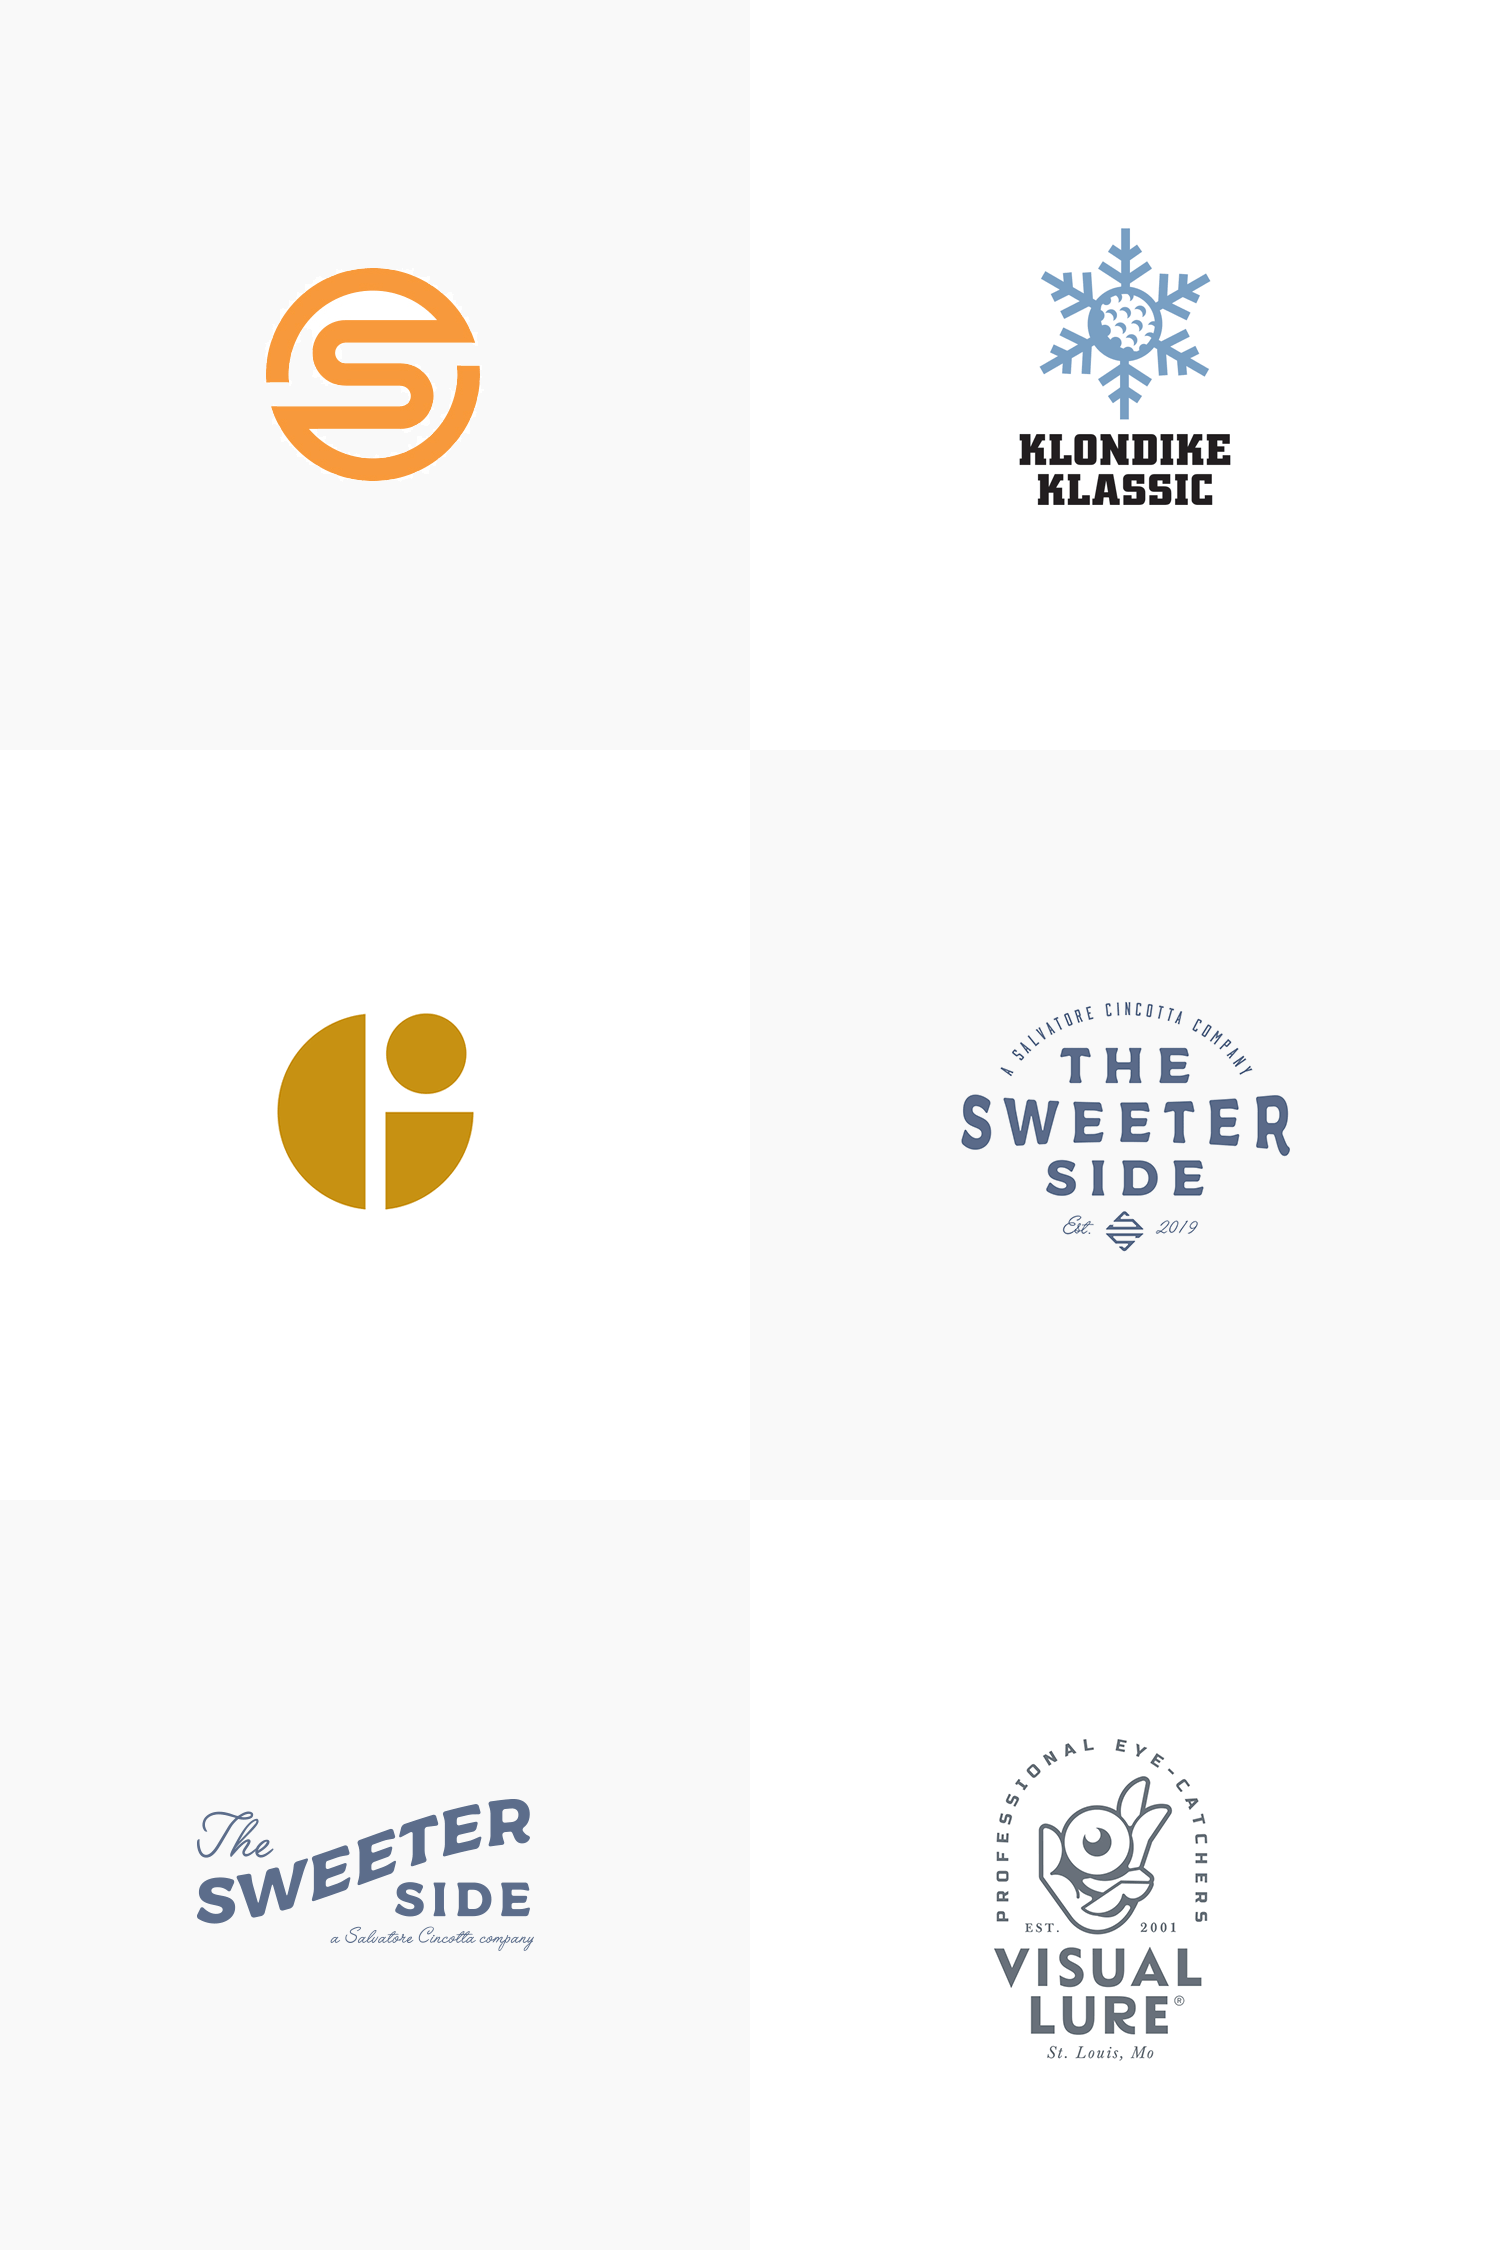 Visual Lure's LogoLounge 12 winning logos